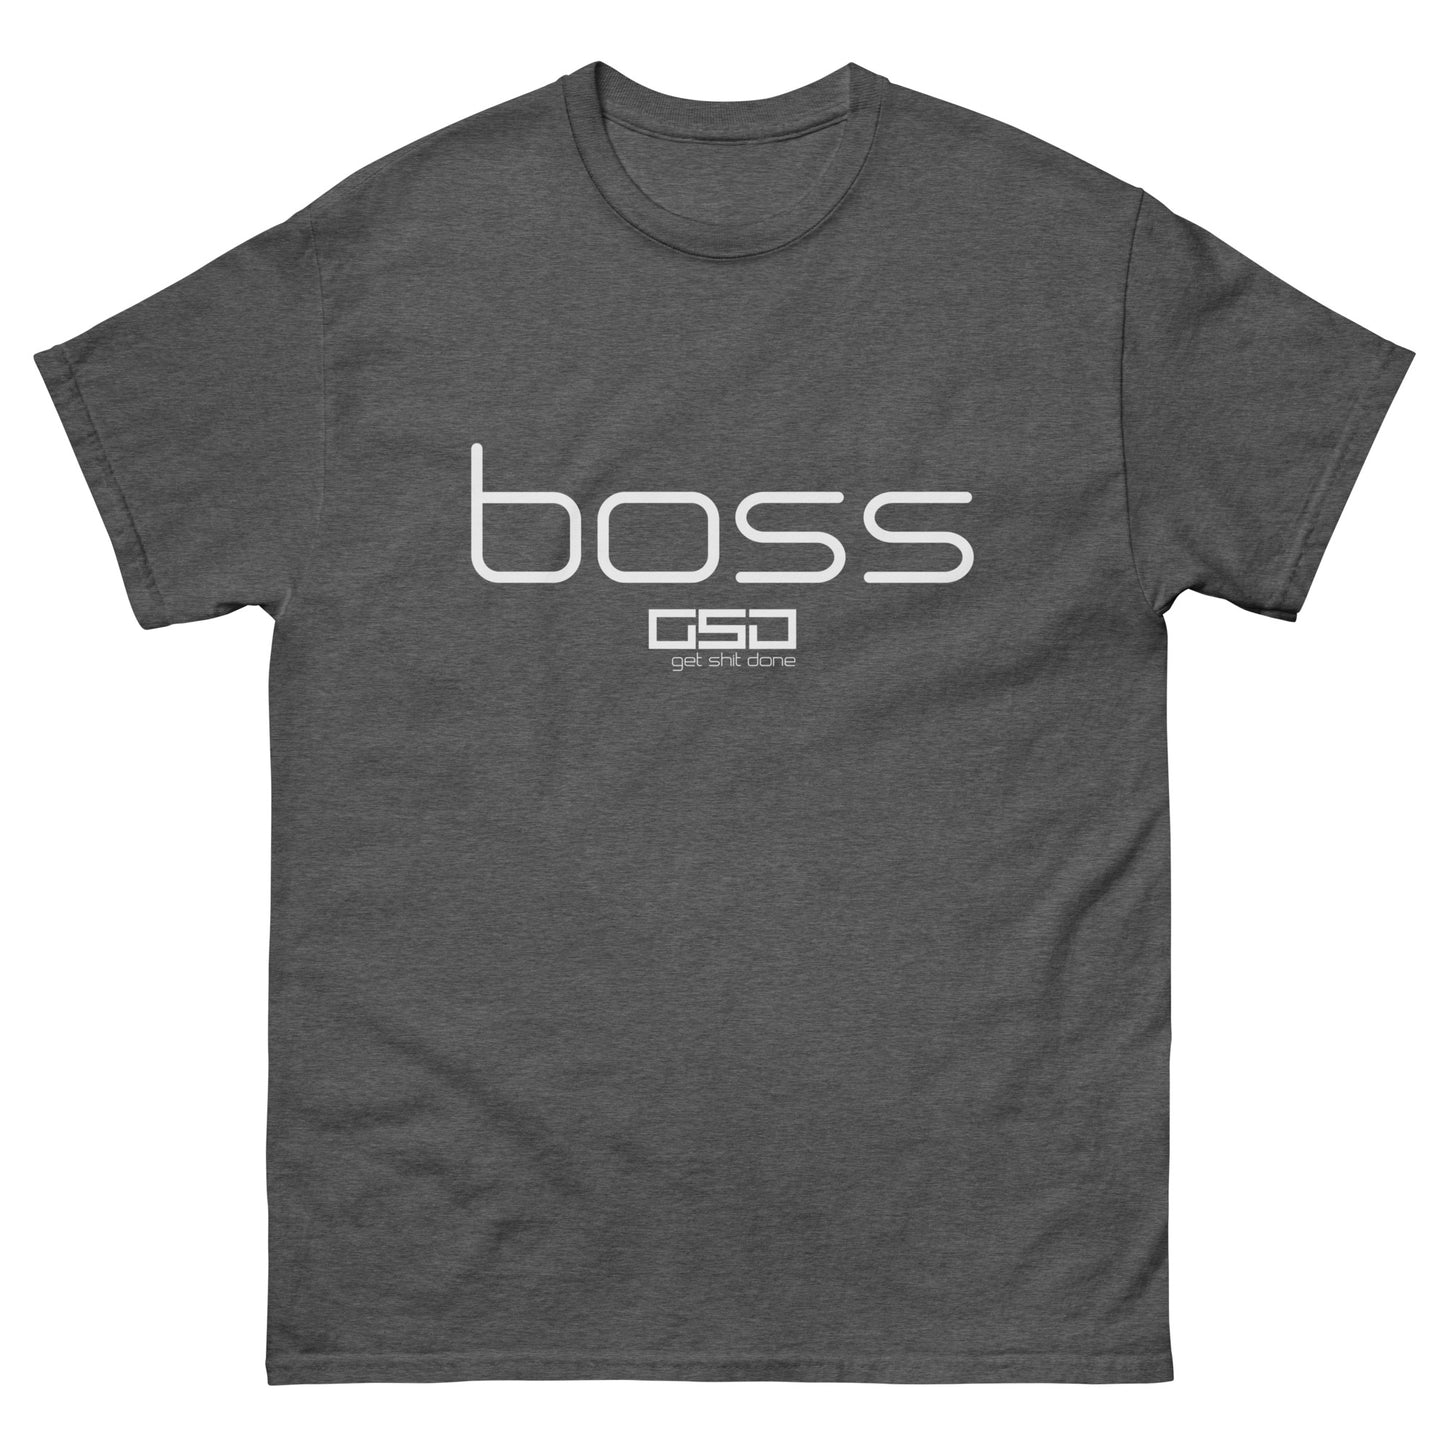 Boss-Classic tee